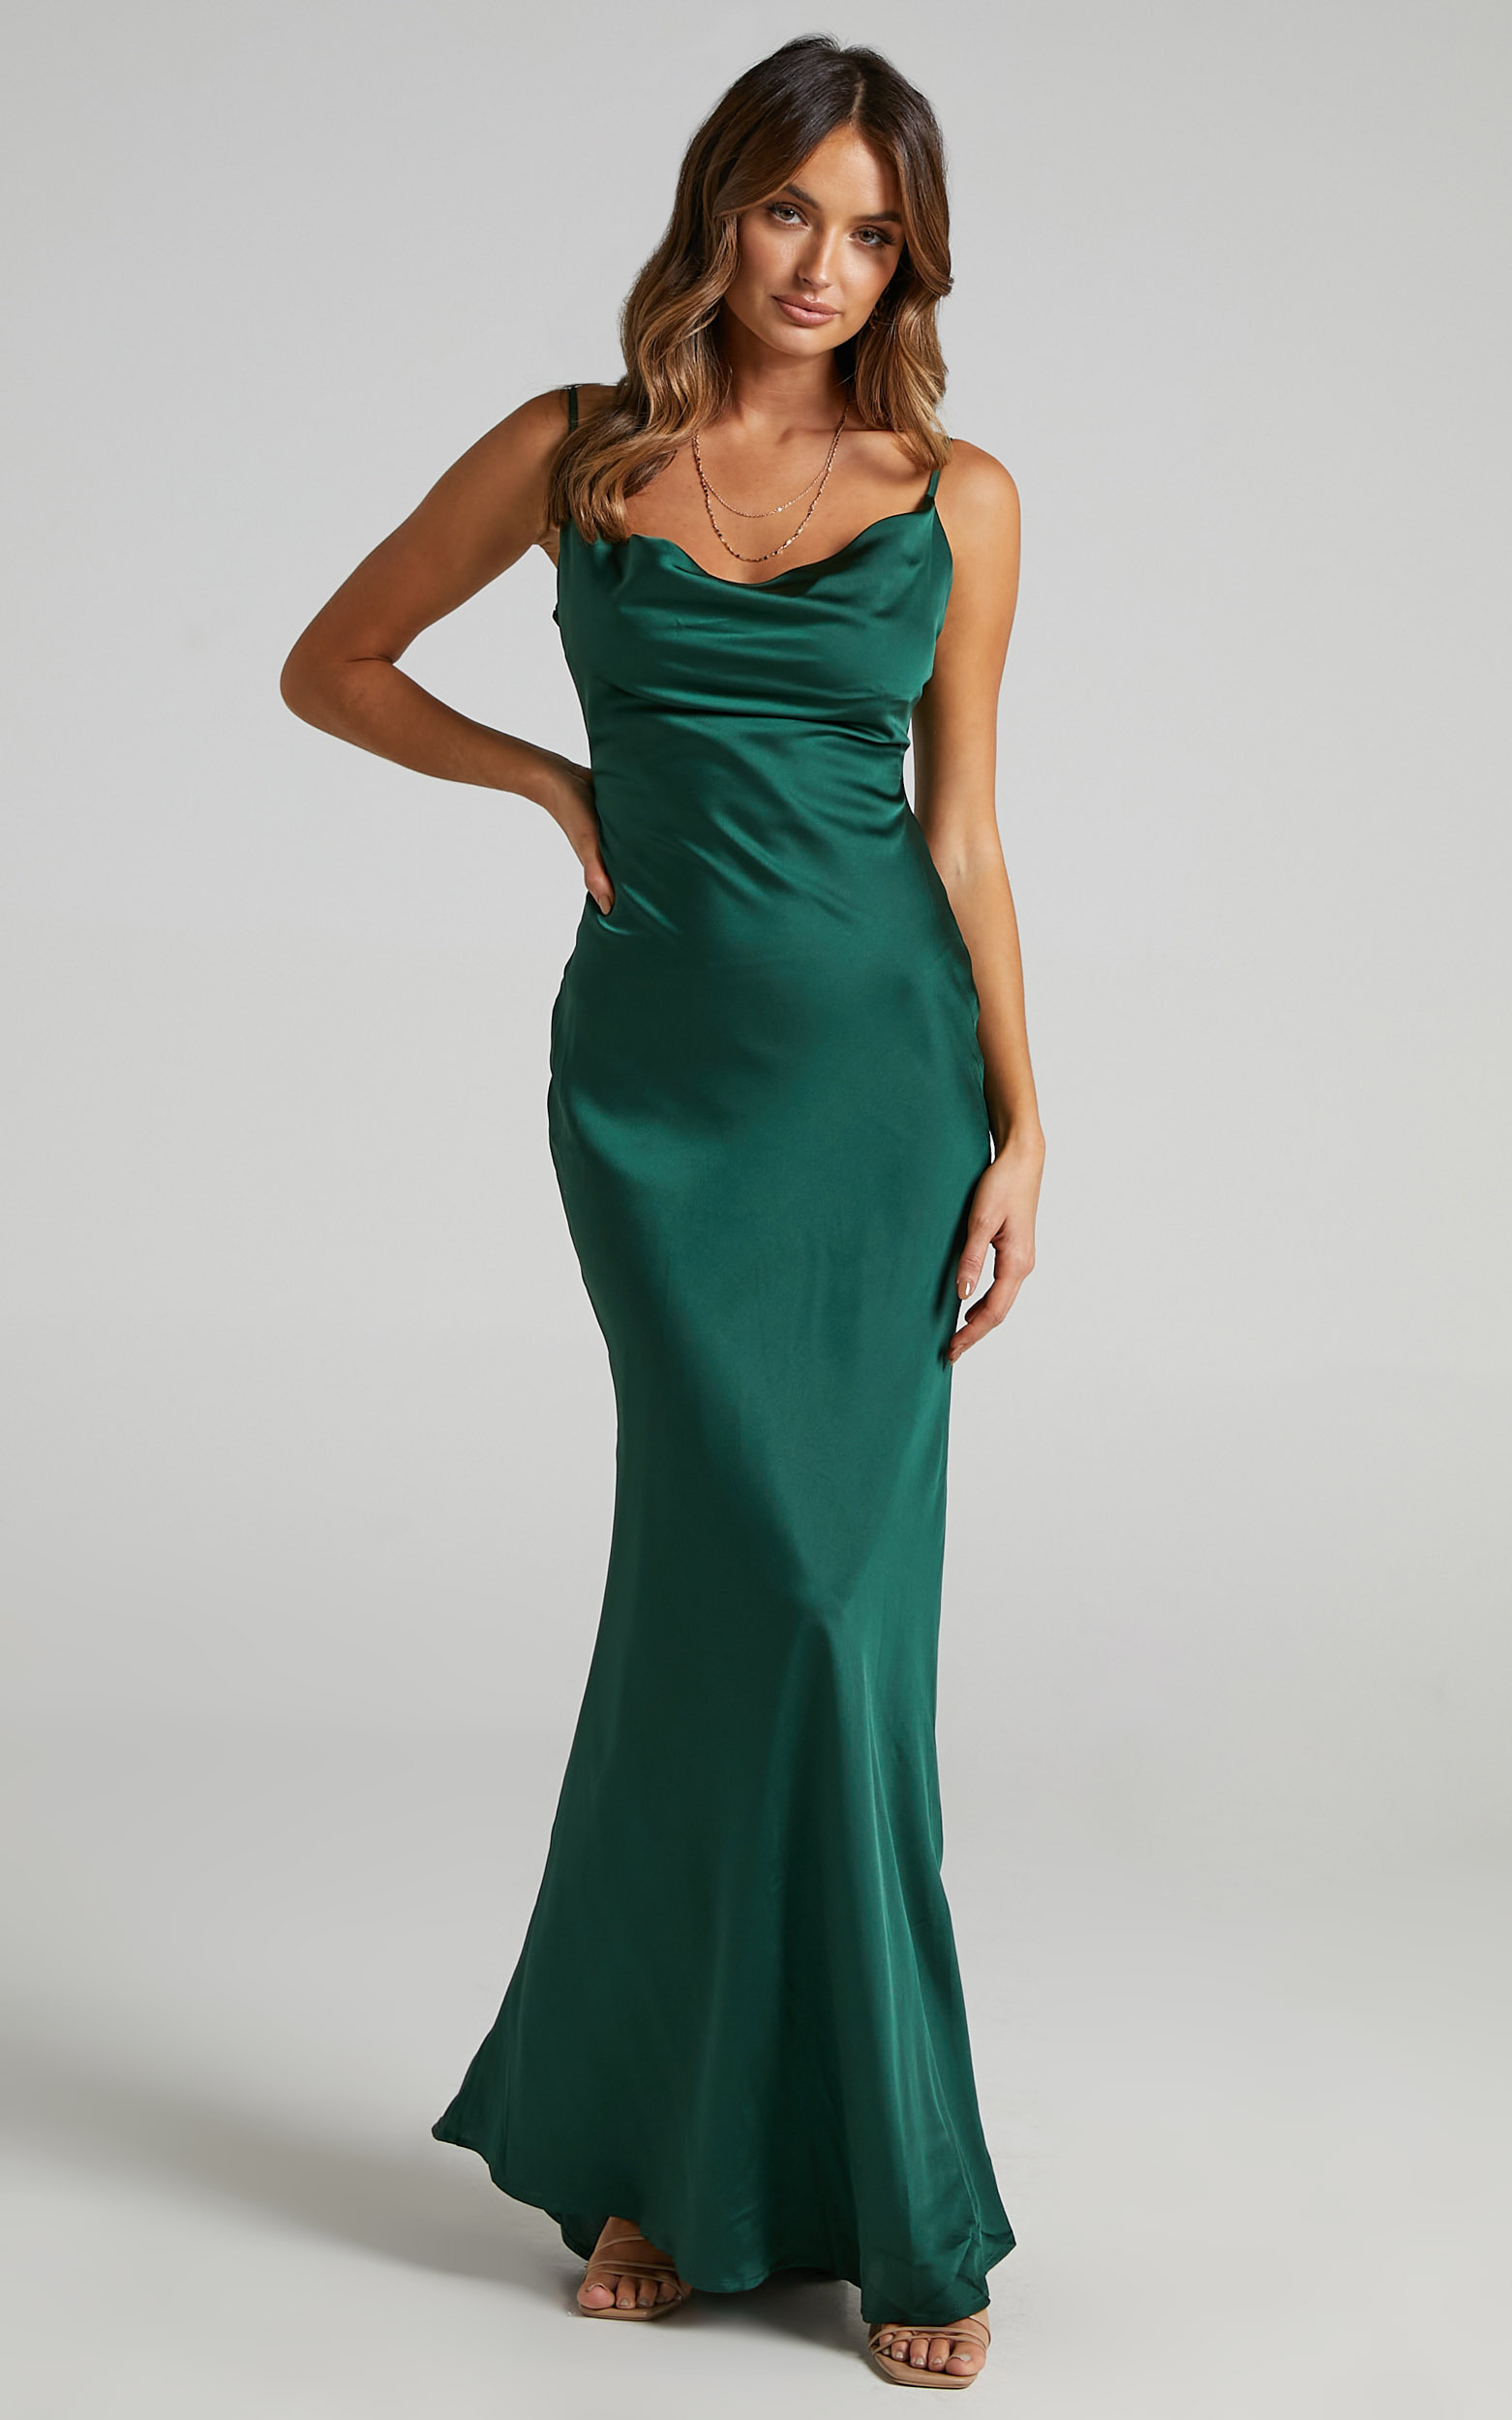 Lunaria Dress in Emerald Satin - 06, GRN3, hi-res image number null